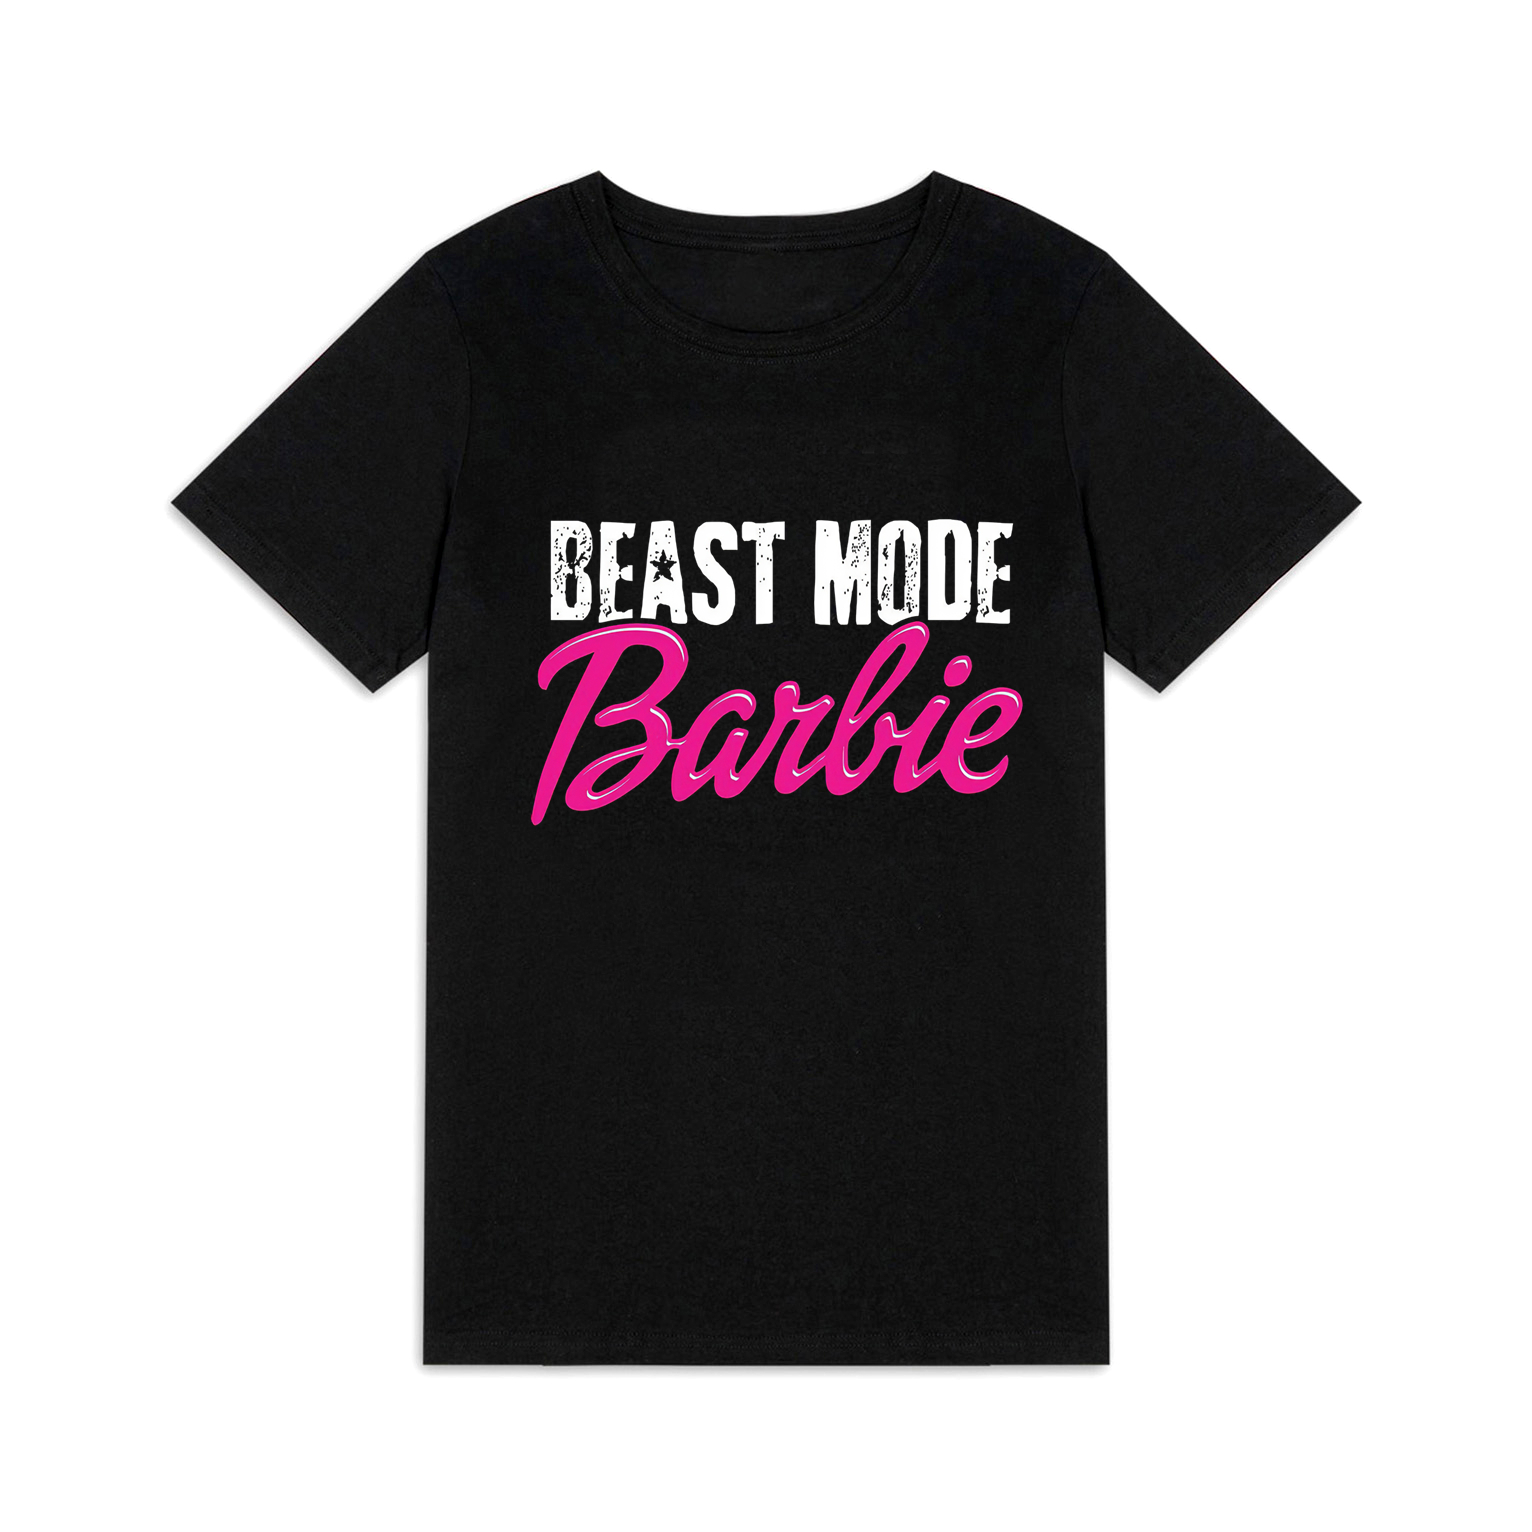 Beast Mode Barbie Printed Women's T-shirt